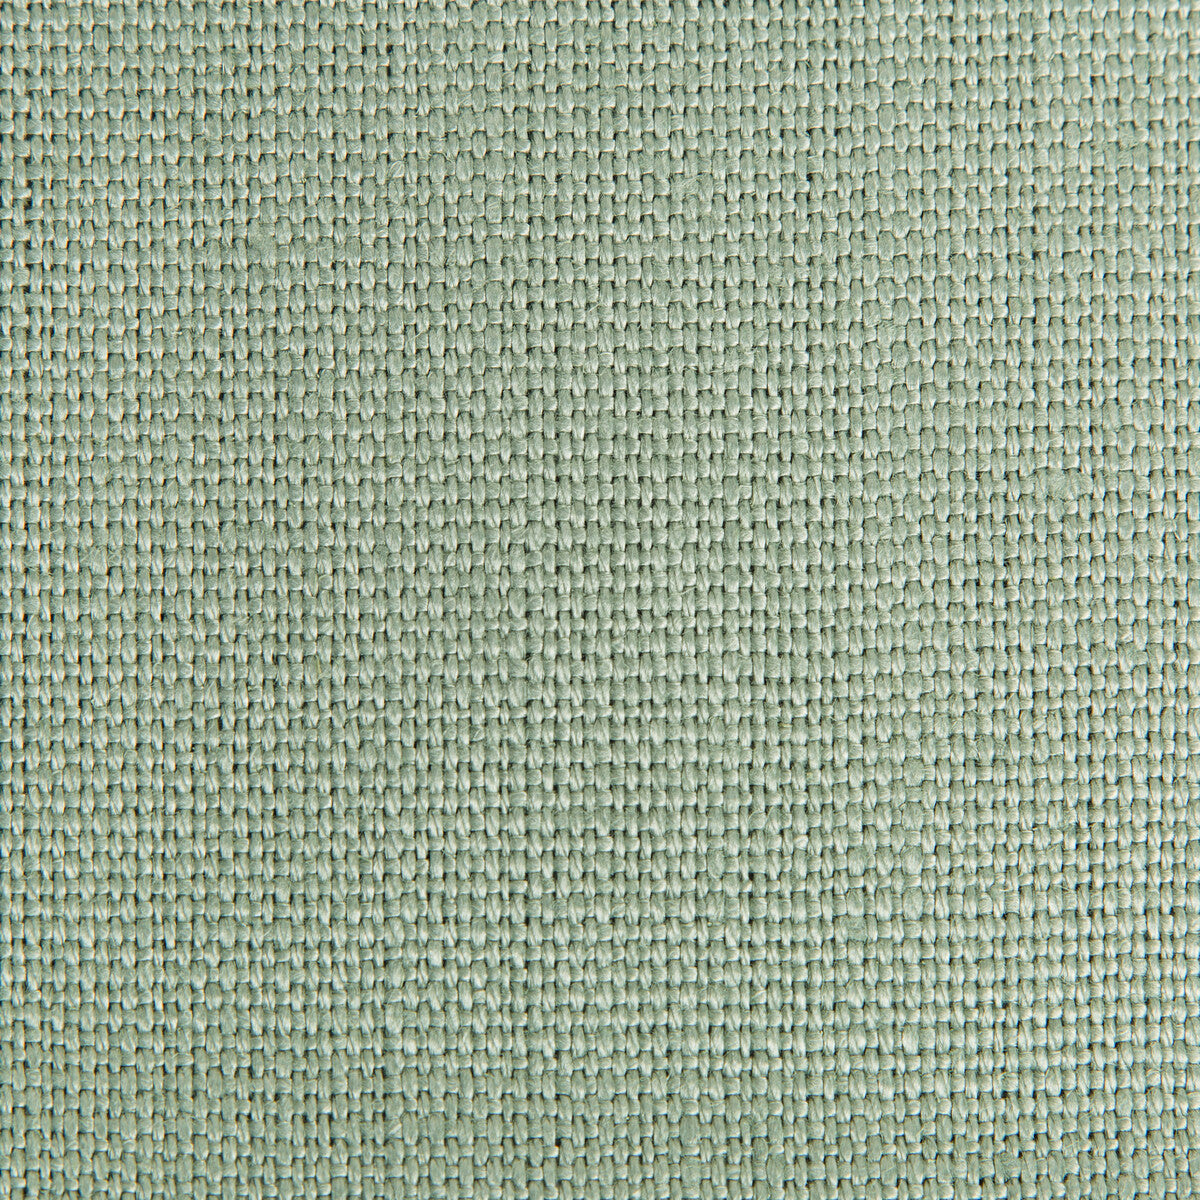 Stone Harbor fabric in mist color - pattern 27591.15.0 - by Kravet Basics